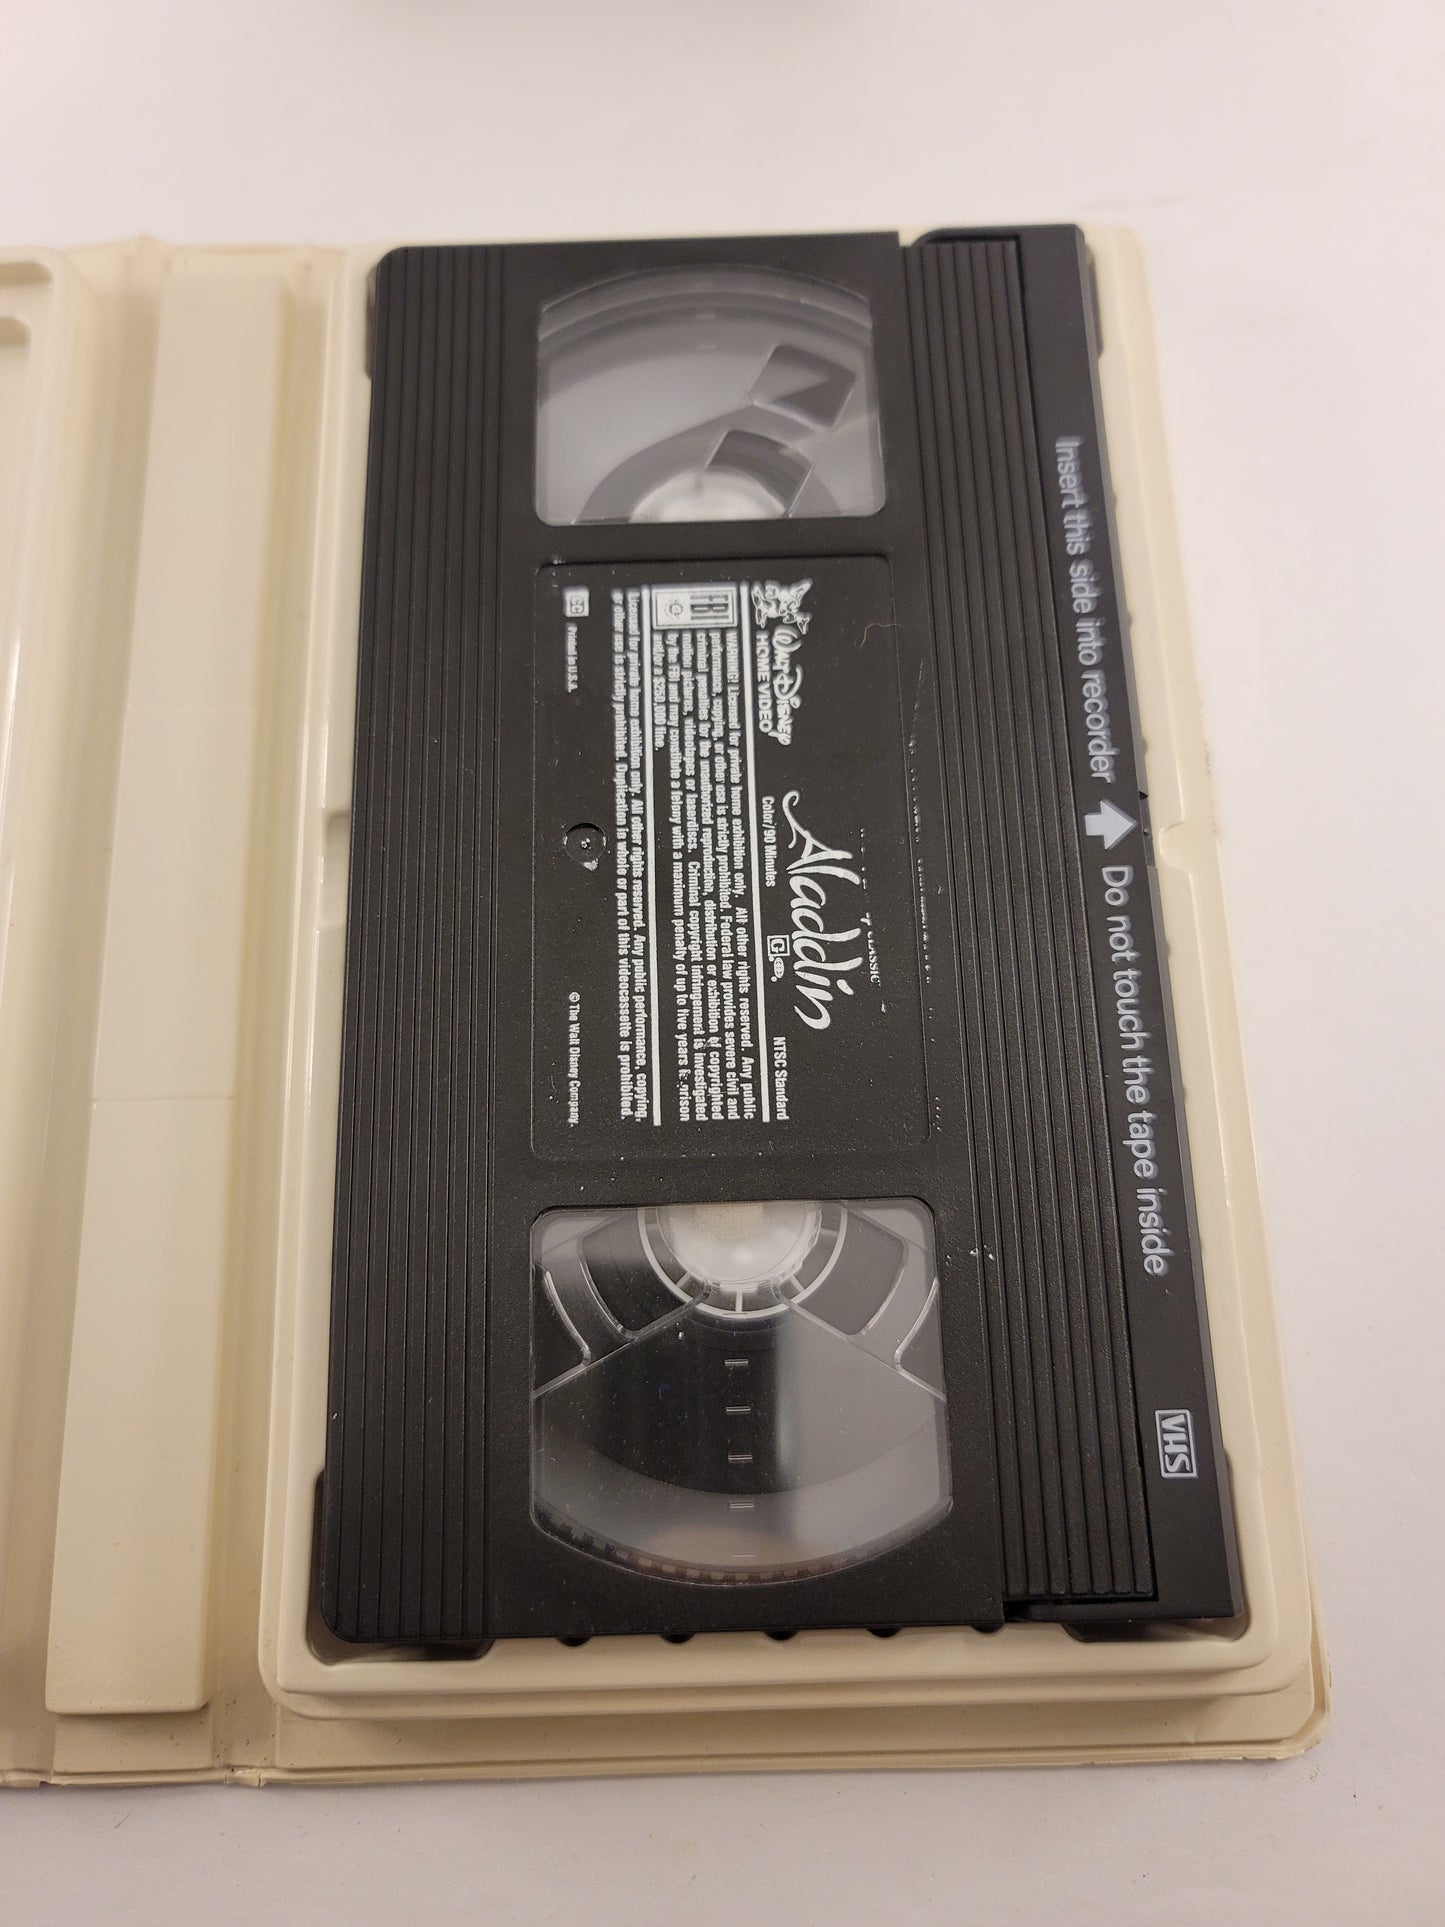 Vintage Disney Black Diamond VHS Bundle - Fox and the Hound, Jungle Book, Aladdin, Robin Hood